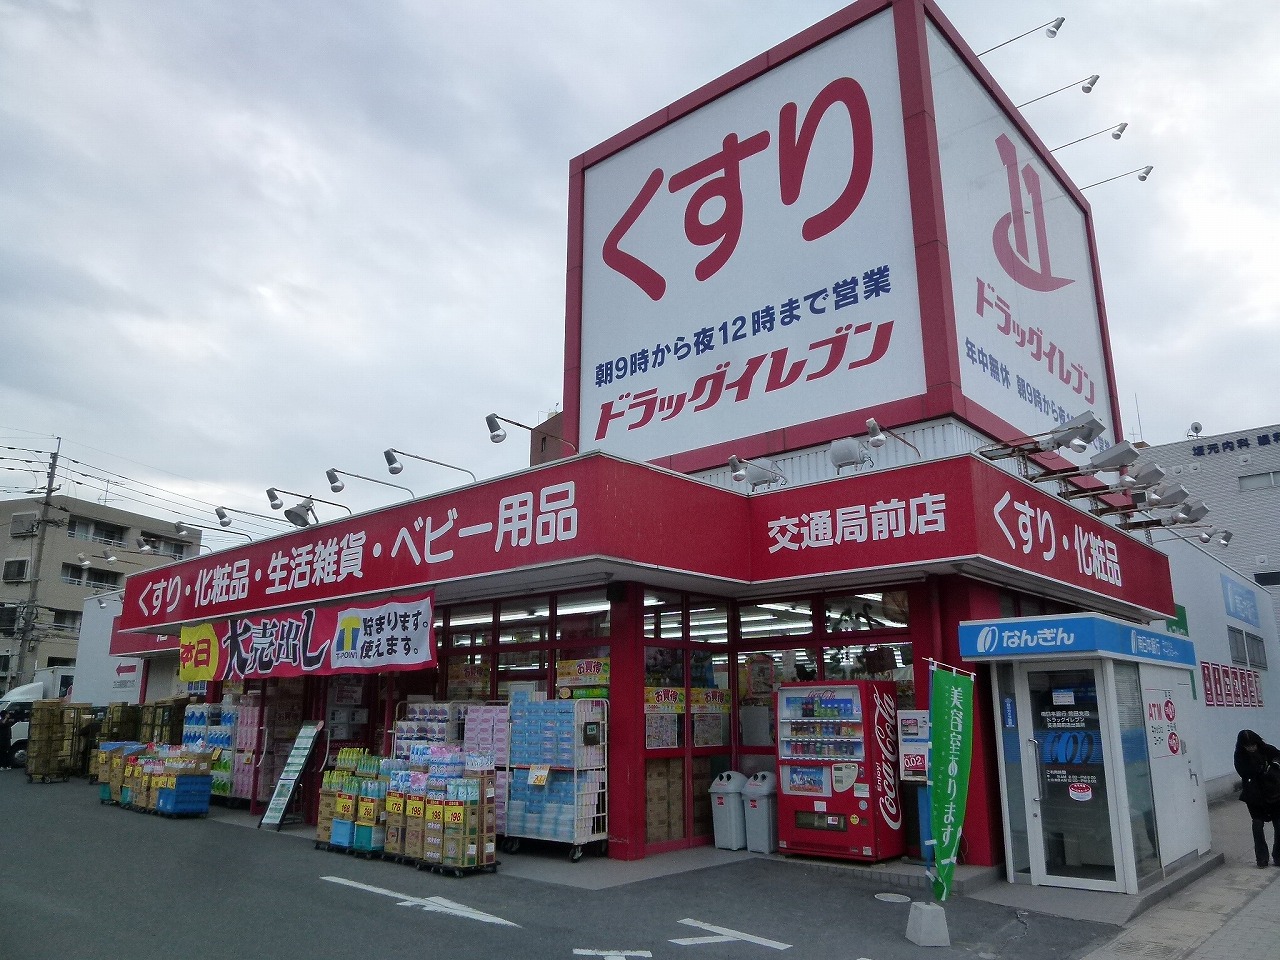 Dorakkusutoa. Drug Eleven Kotsukyokumae shop 203m until (drugstore)